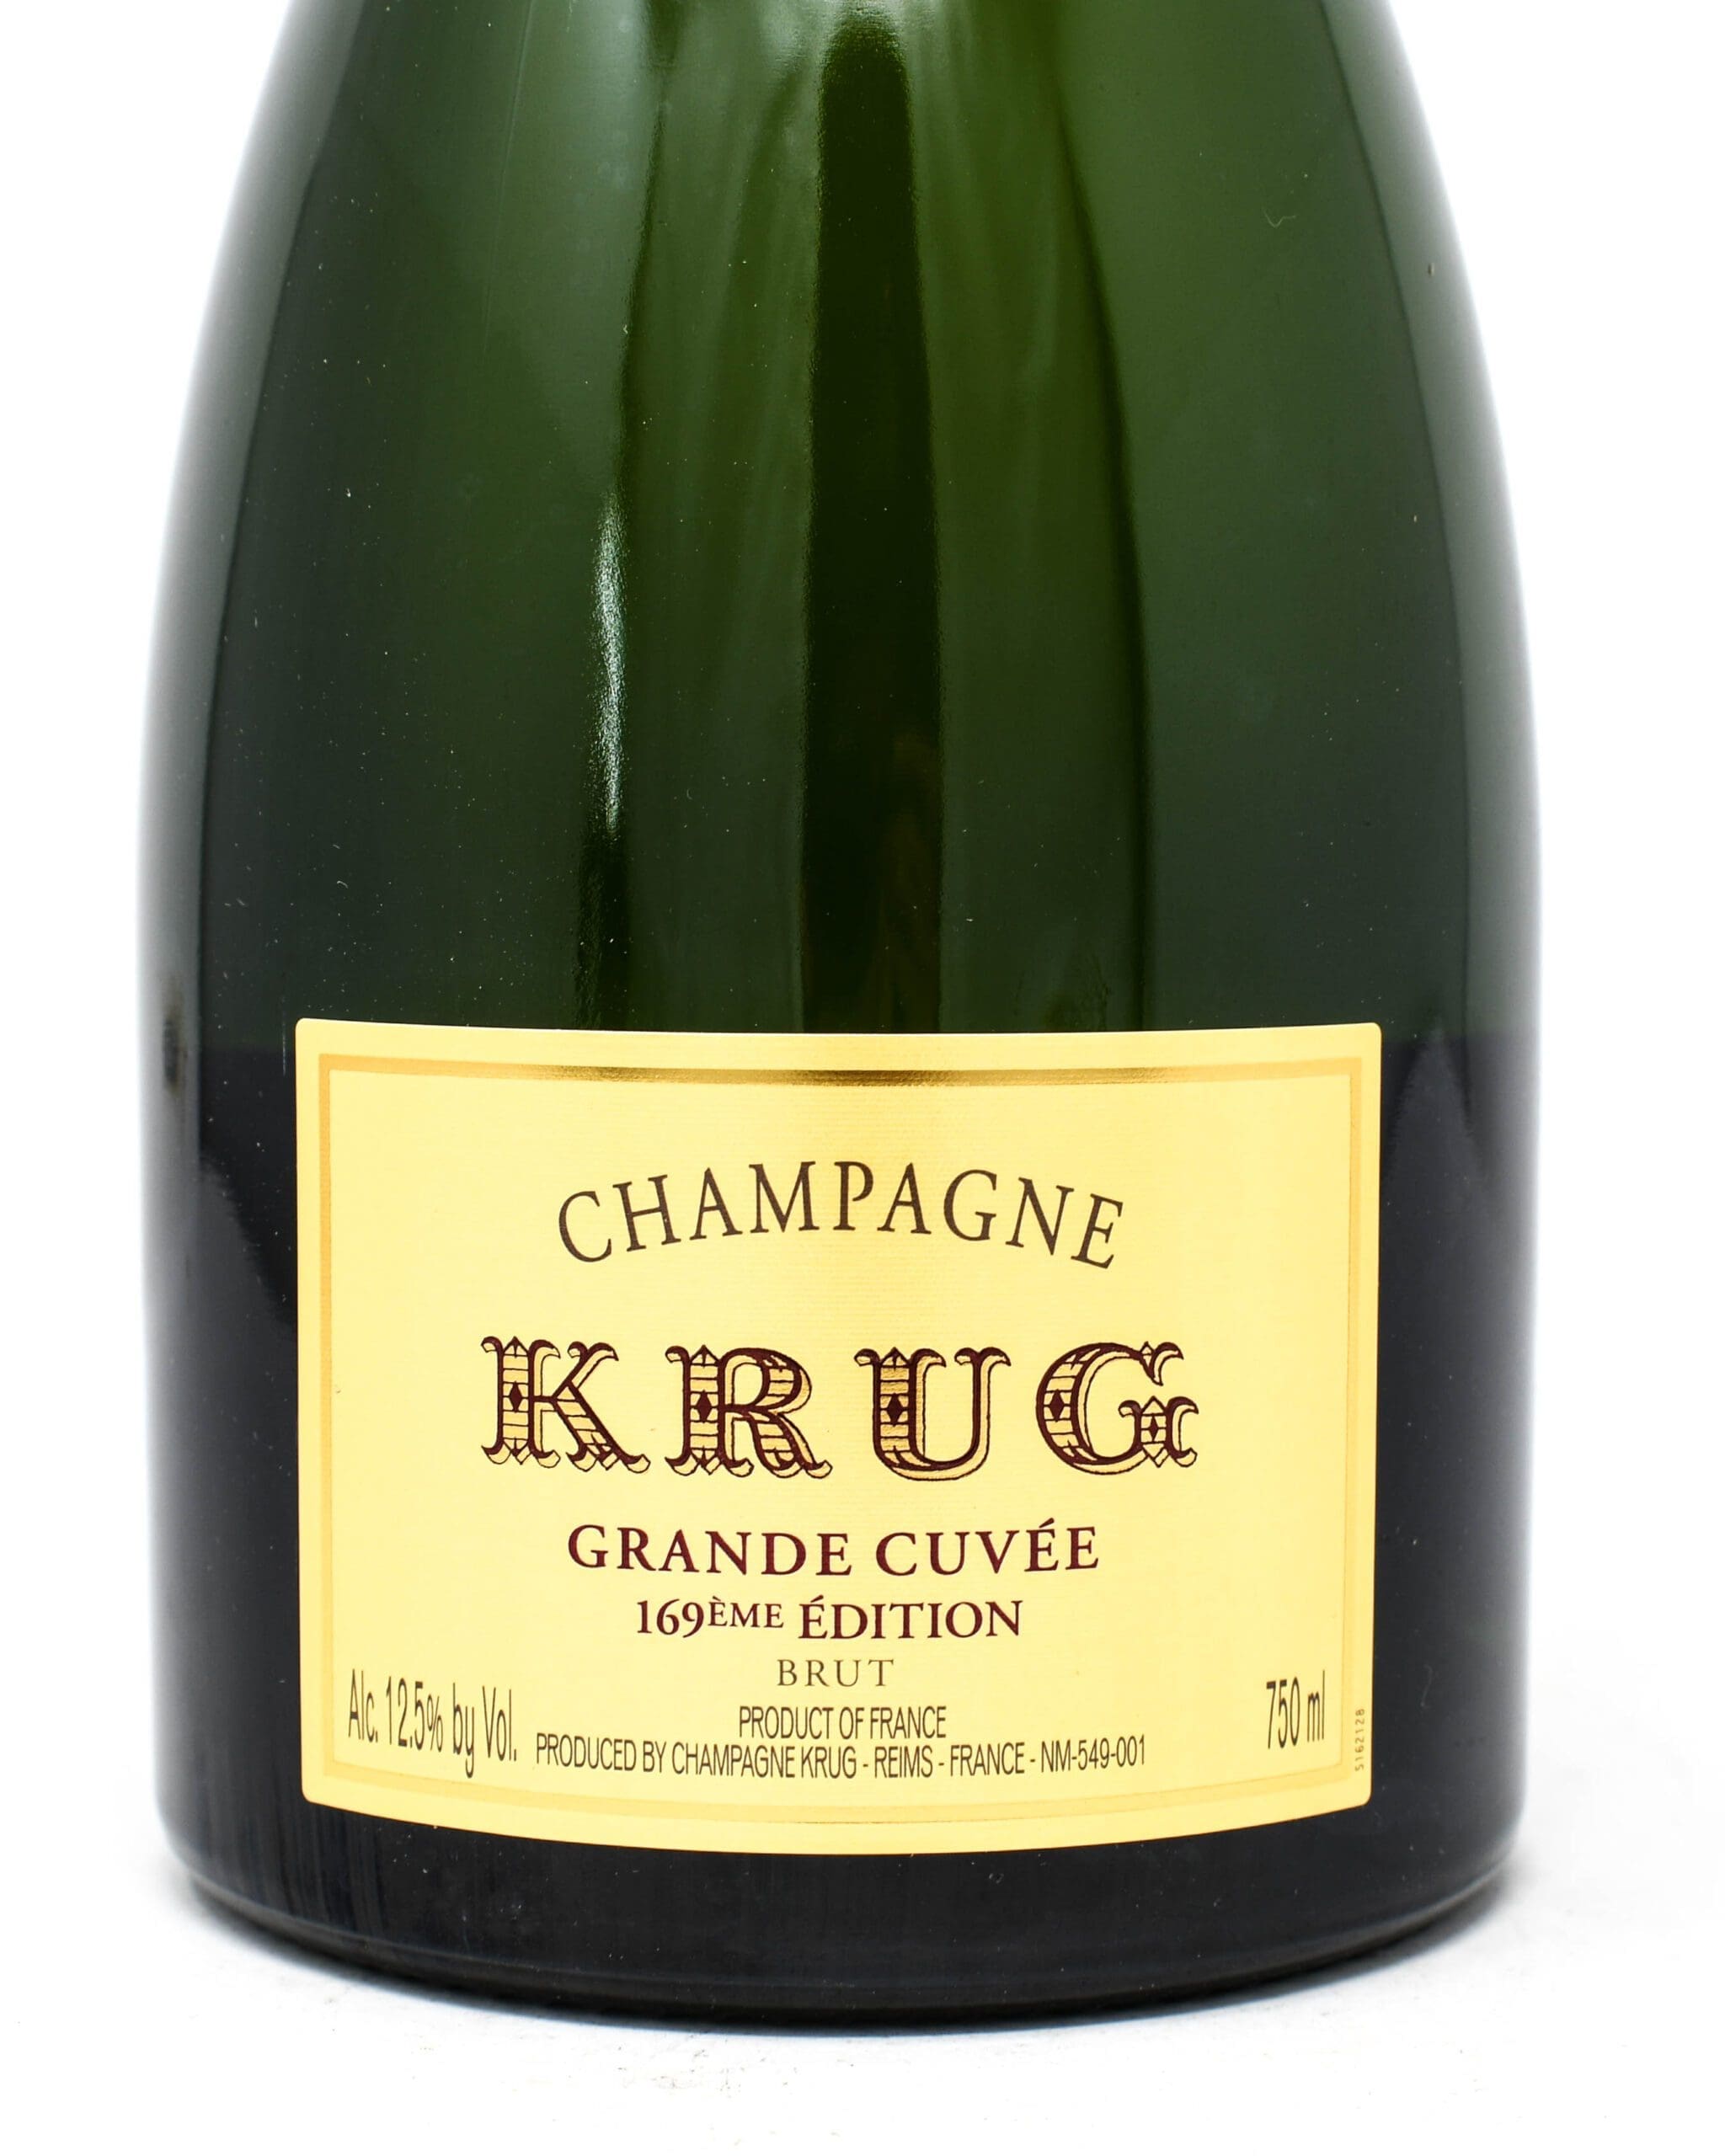 Where to buy Krug Grande Cuvee Brut, Champagne, France